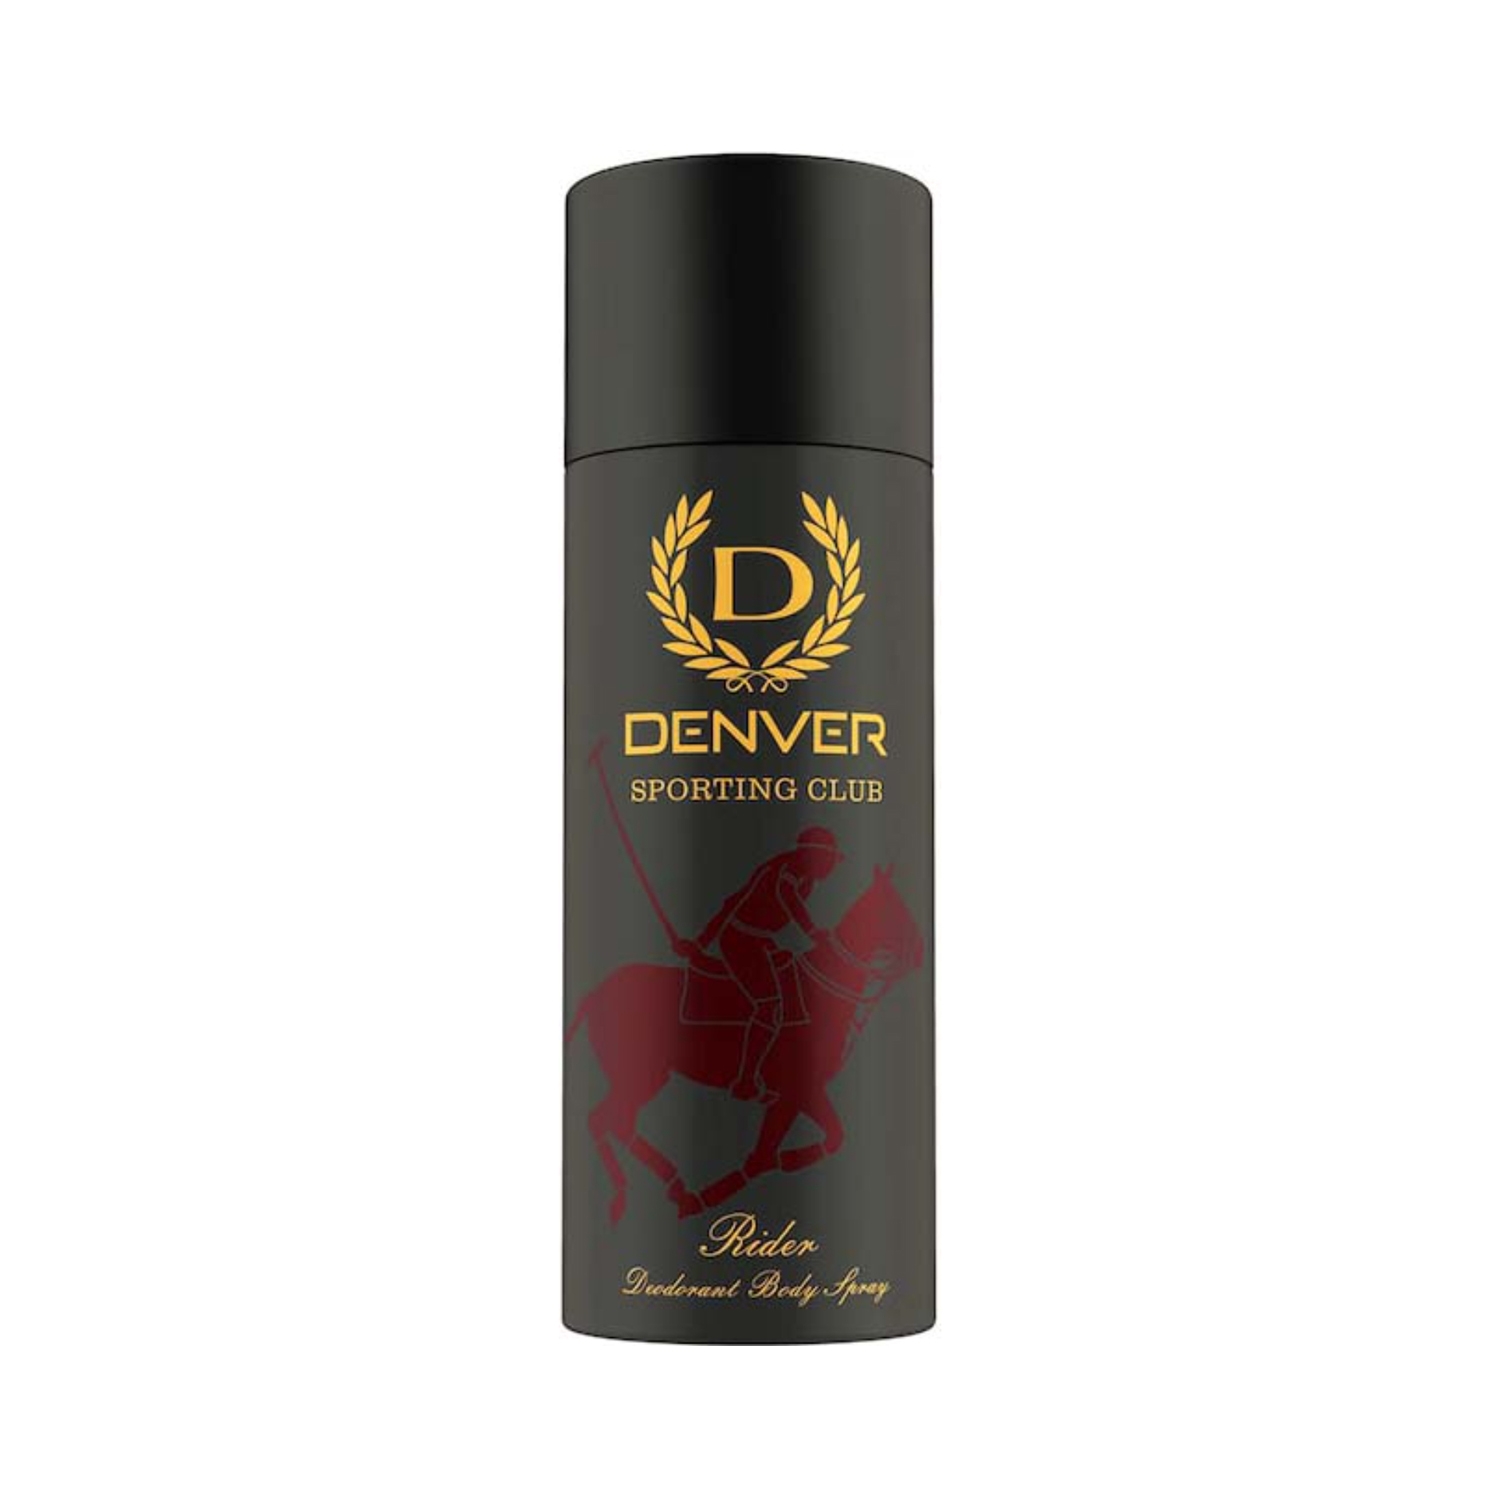 Denver | Denver Sporting Club Rider Deodorant Body Spray for Men (200ml)